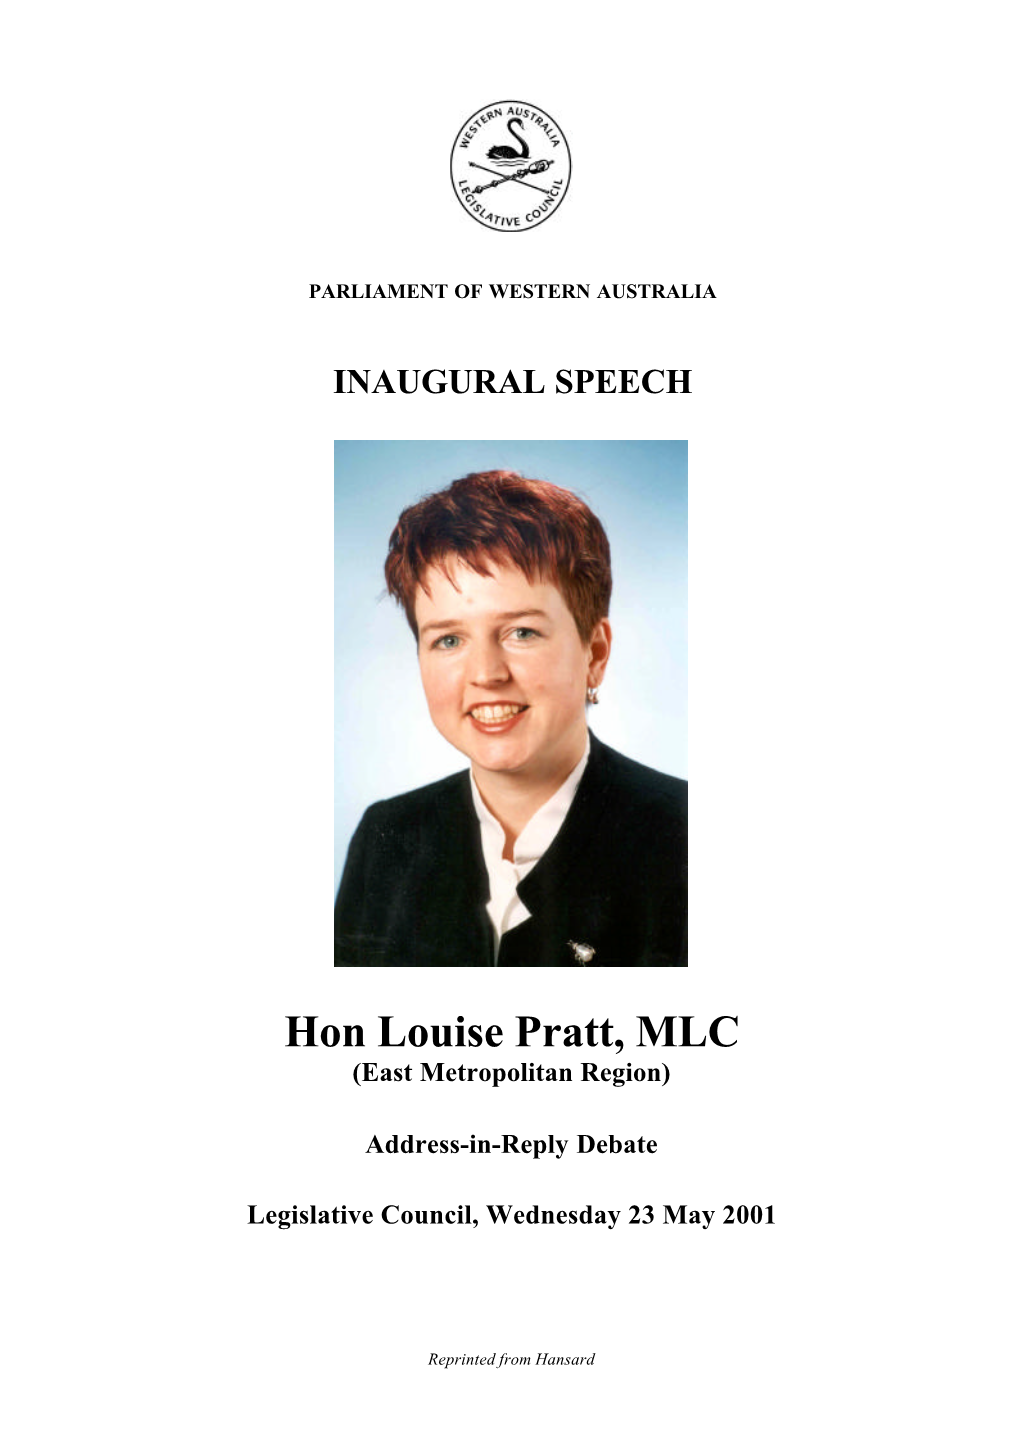 Hon Louise Pratt, MLC (East Metropolitan Region)